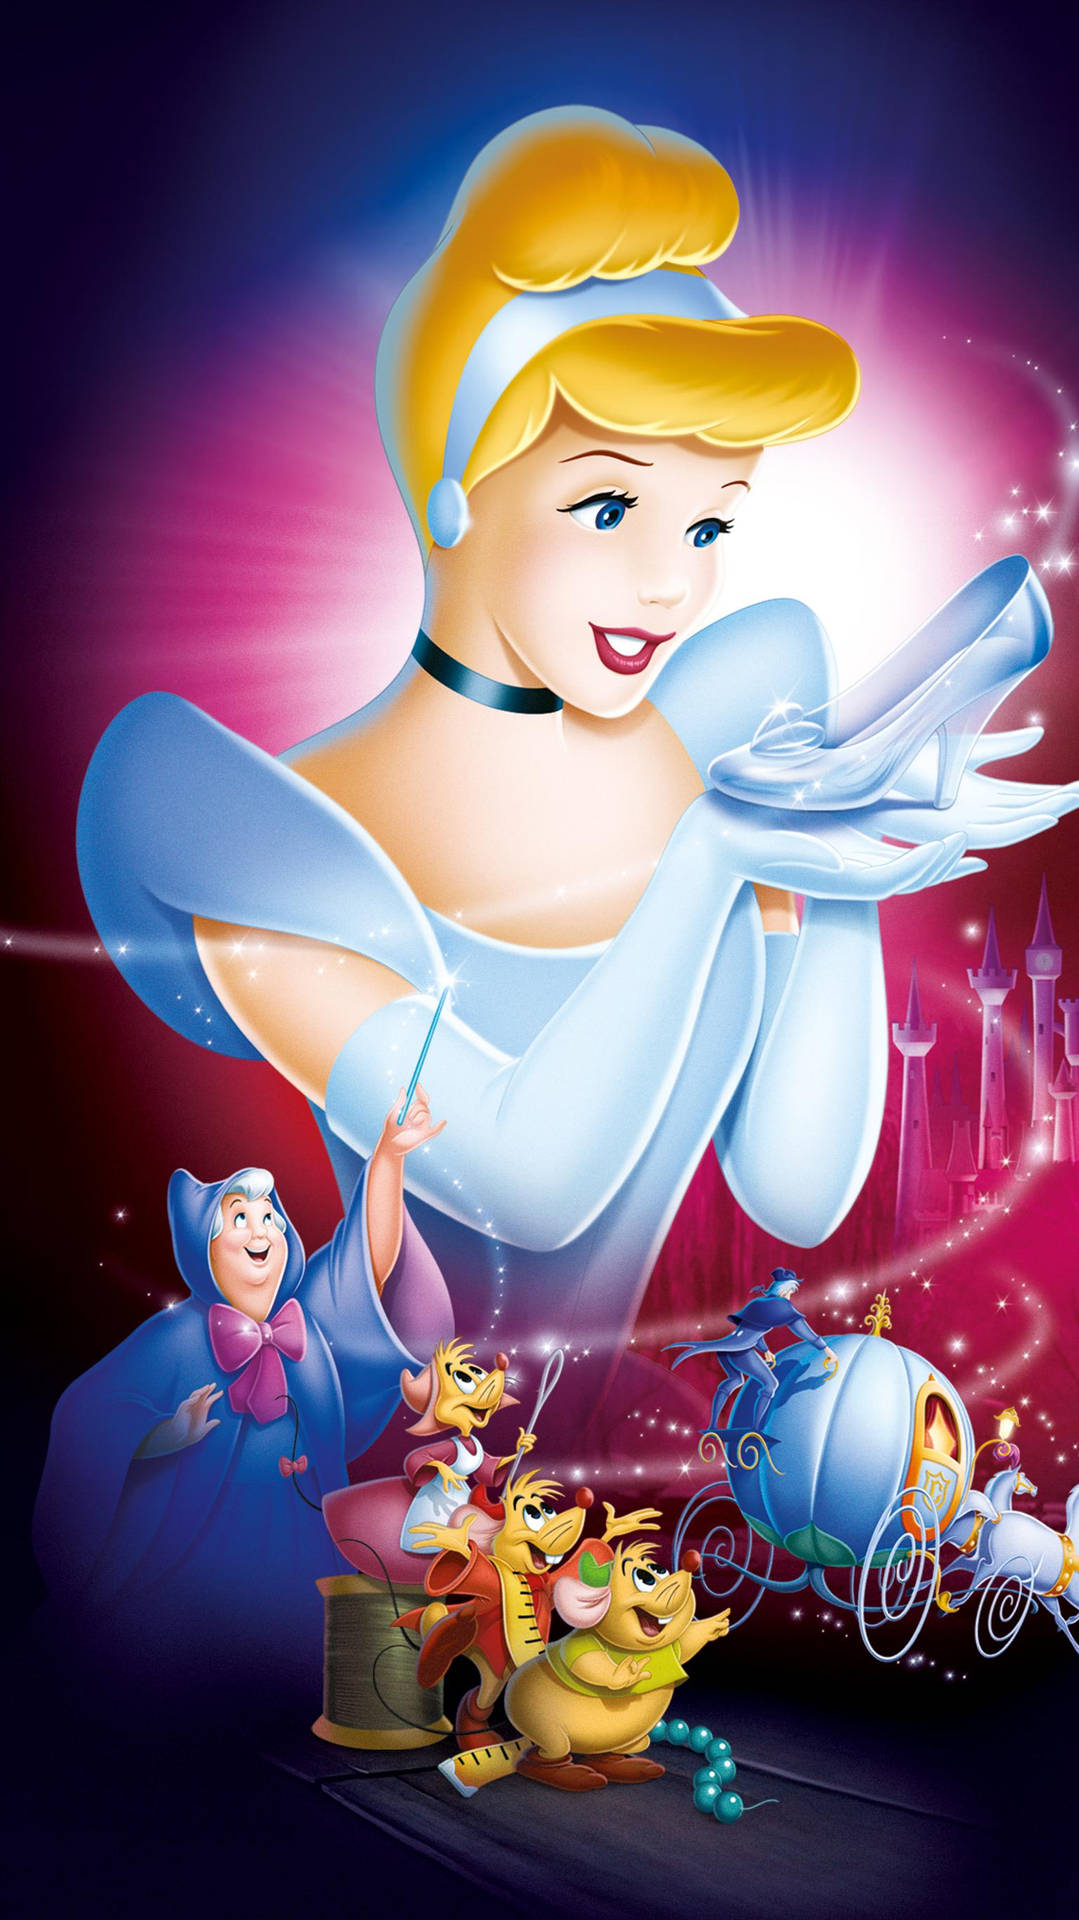 Disney Cinderella Characters Wallpaper